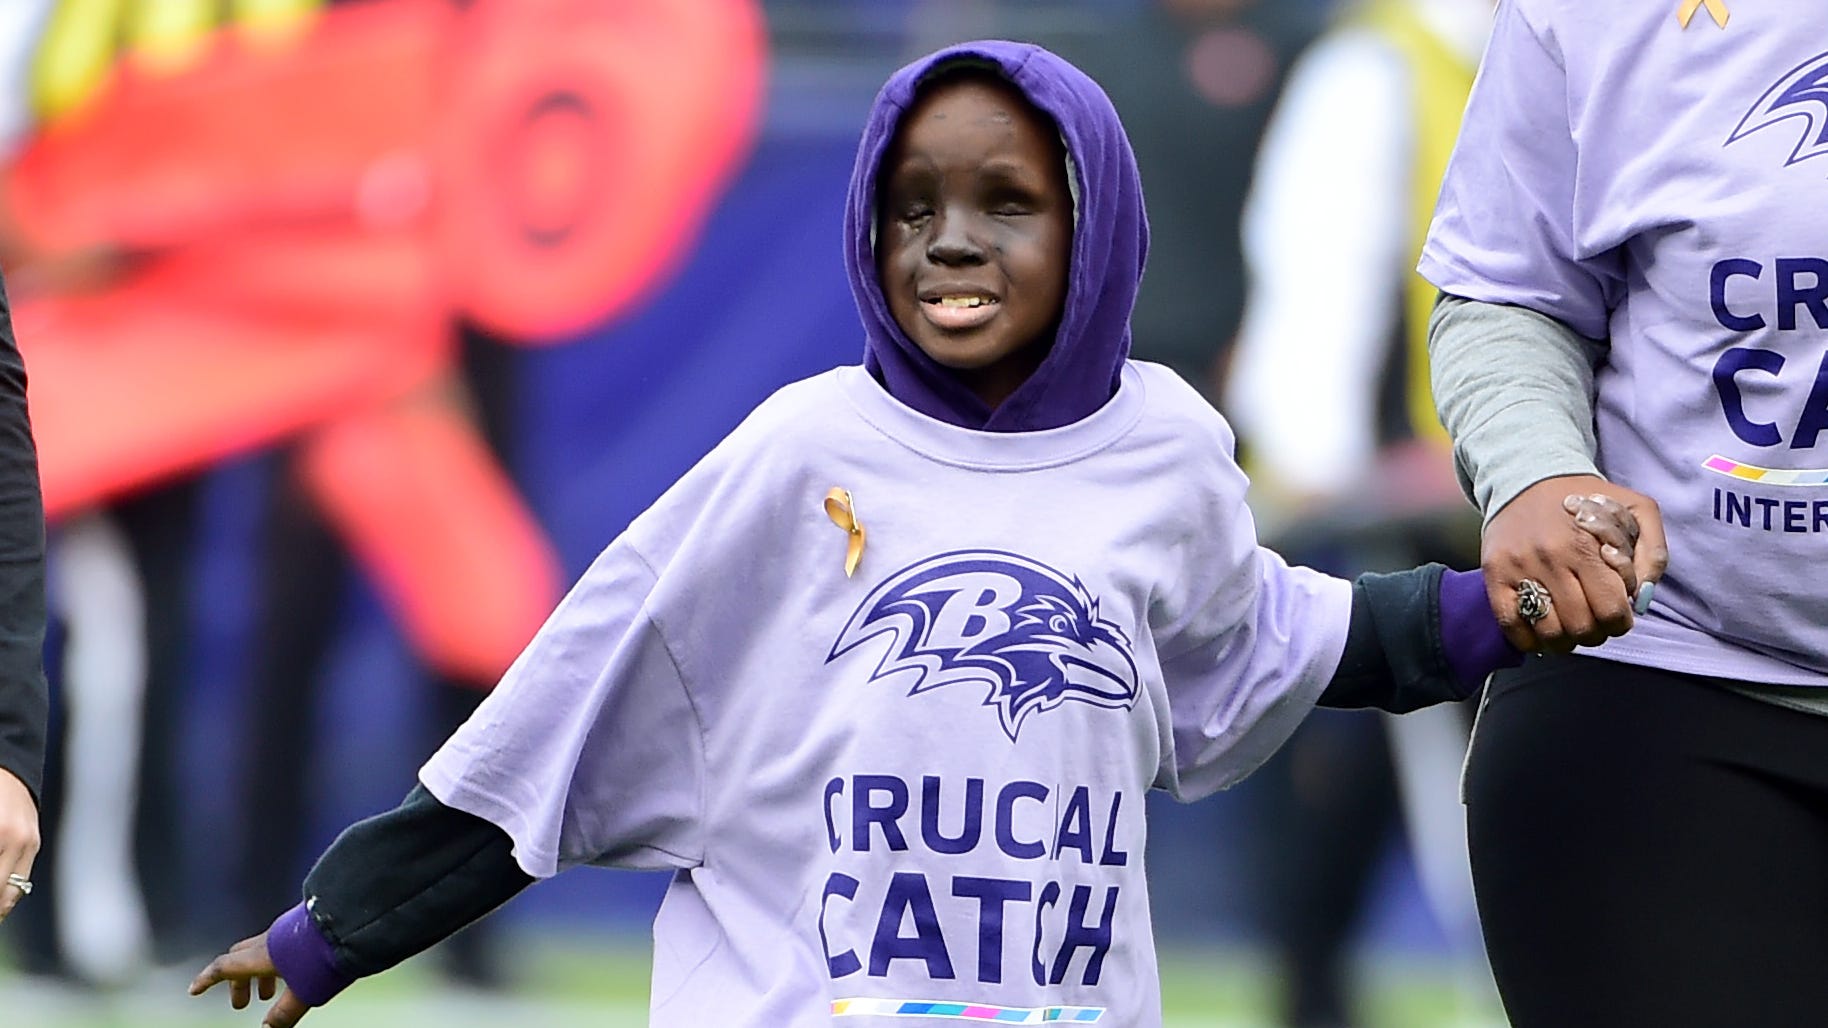 Mo Gaba Baltimore Orioles, Ravens honor superfan who died